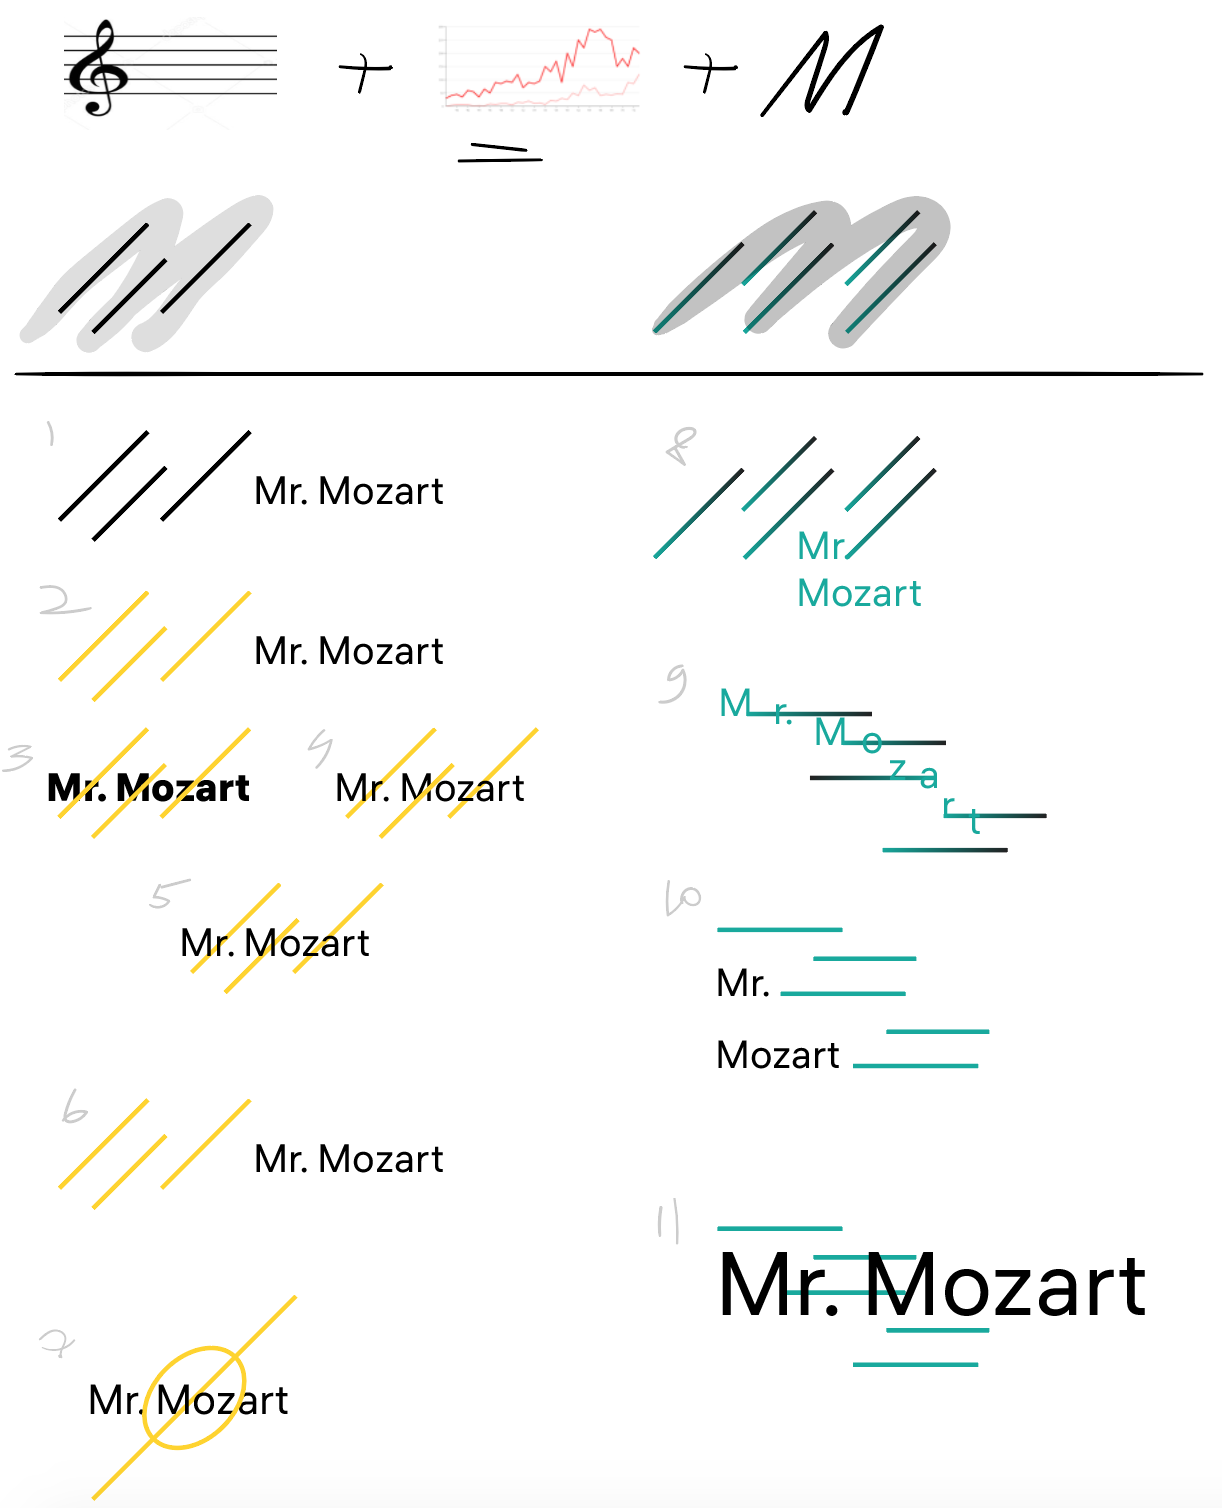 Мистер Моцарт. Инвестор Mr Mozart. Mr Mozart трейдер кто это.